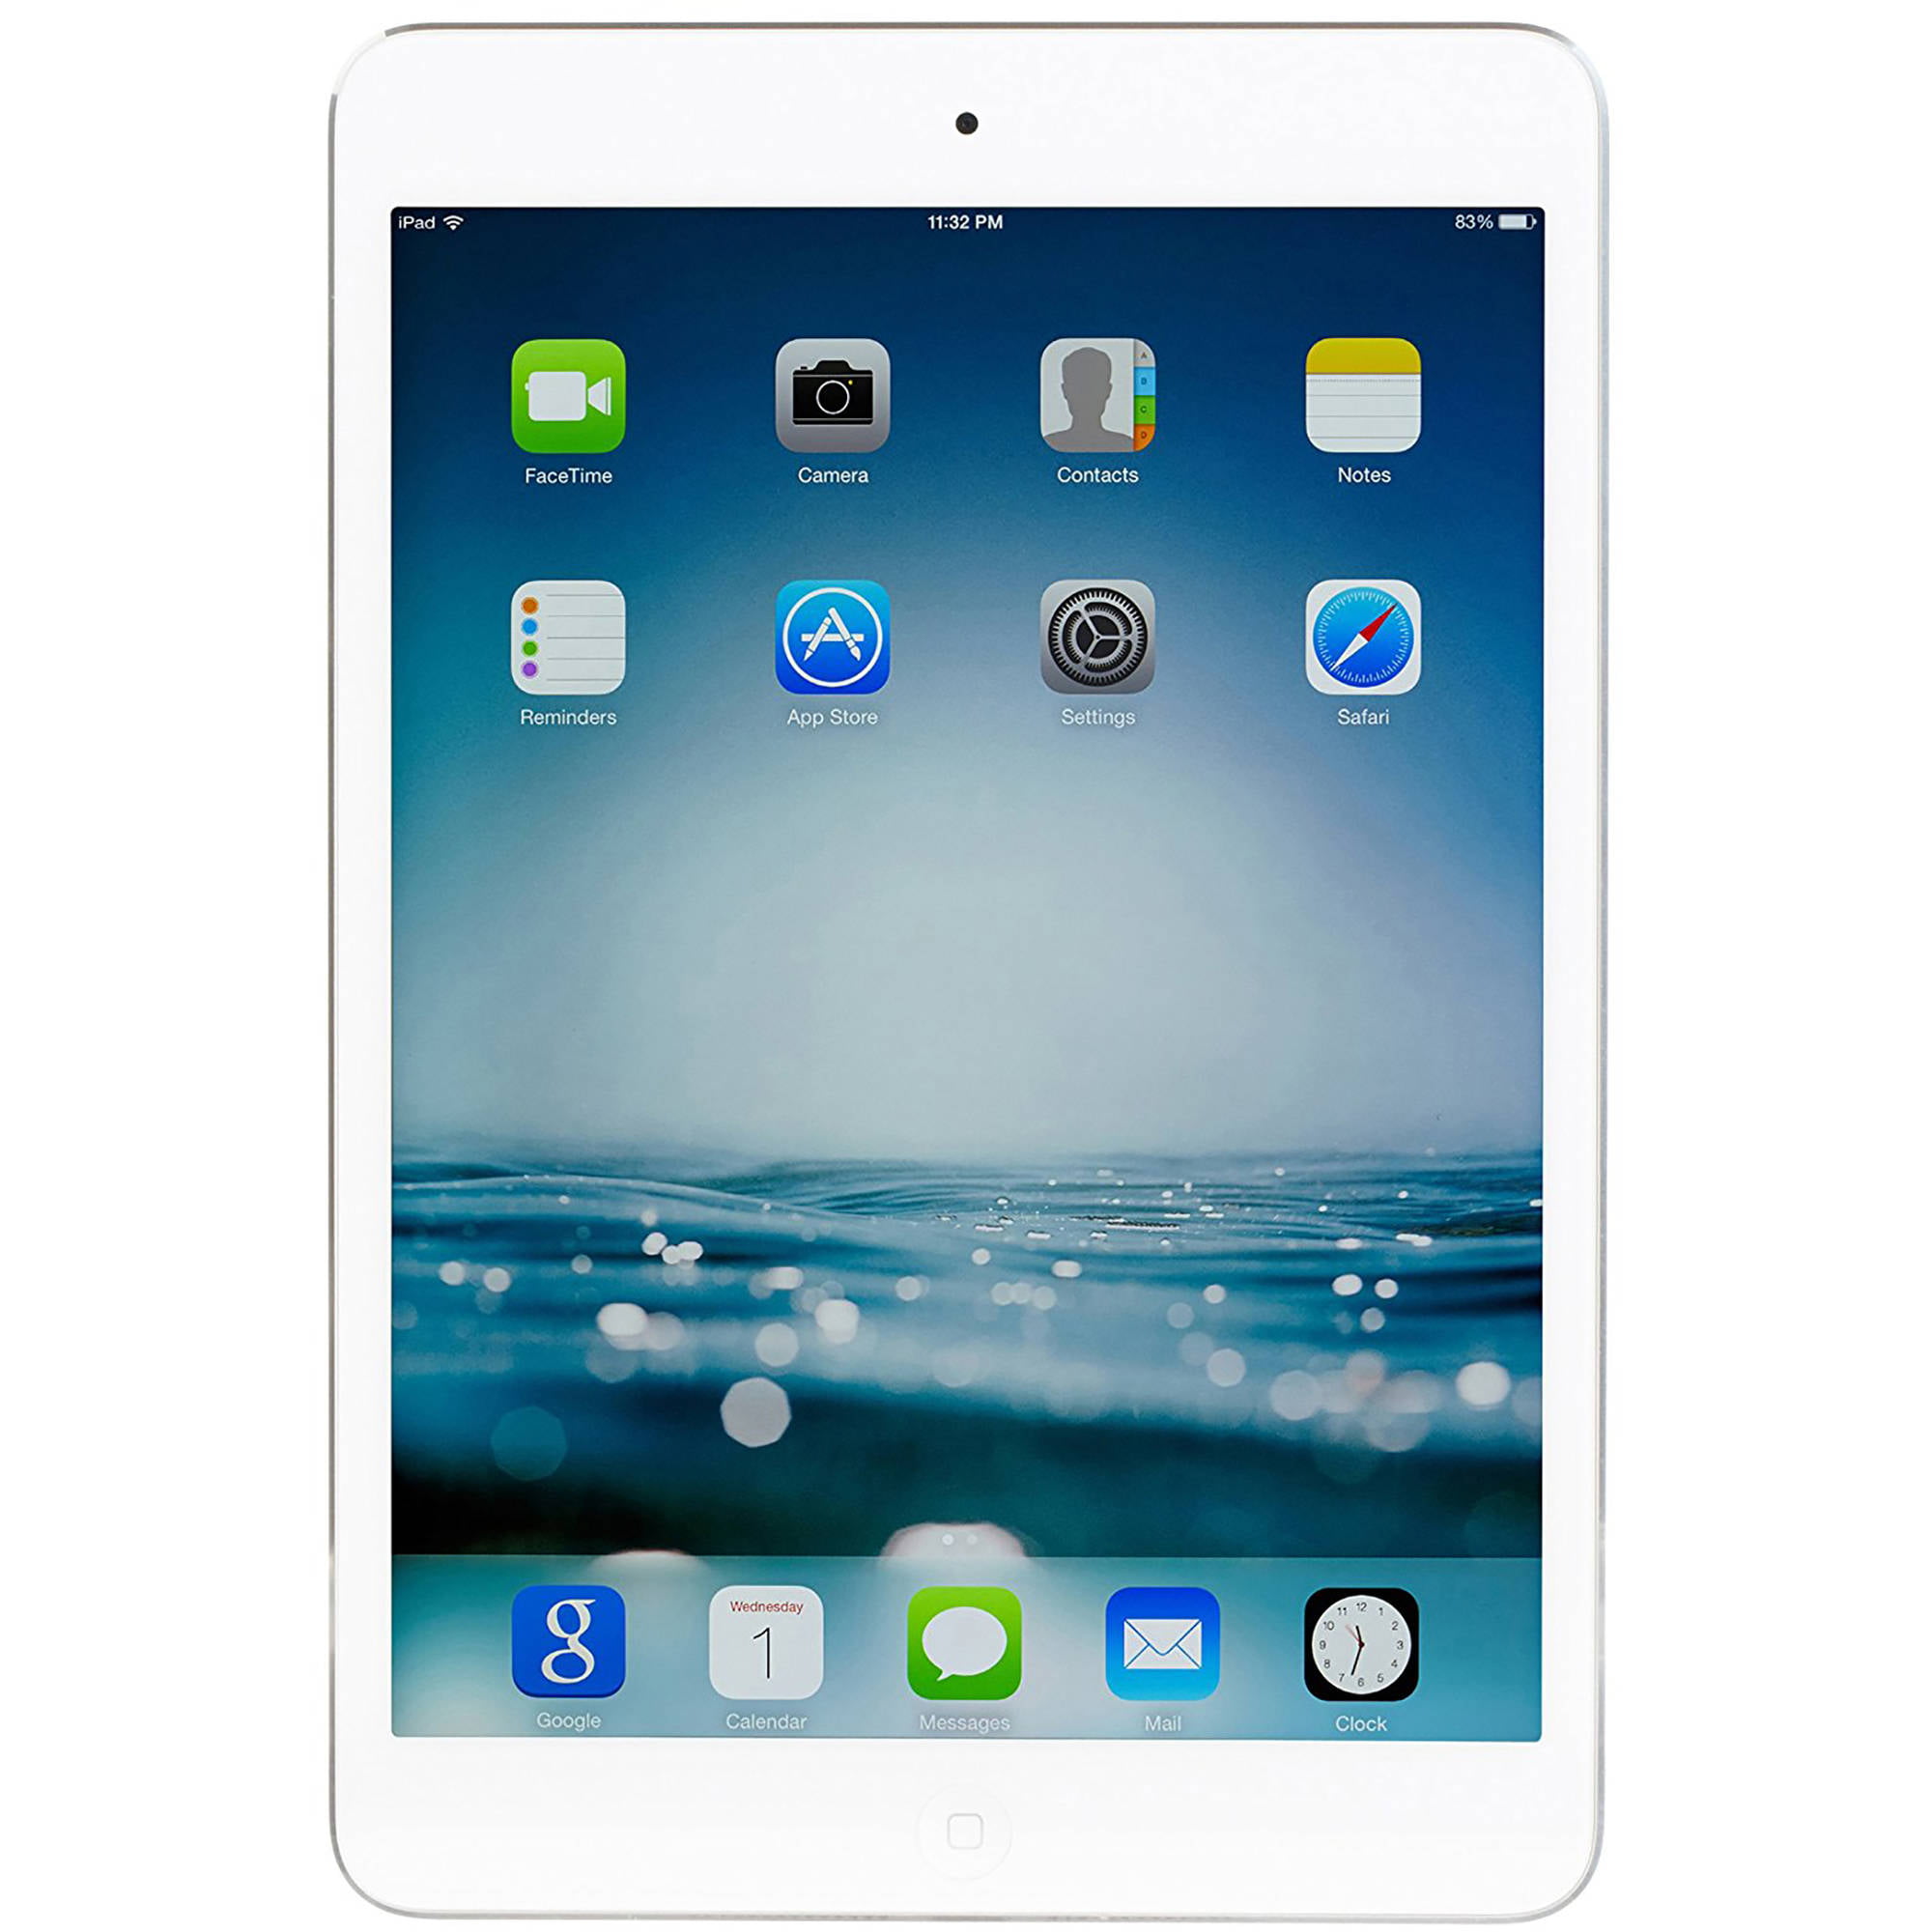 Apple iPad Mini 2 16GB Unlocked 4G LTE Dual-Core Tablet - White - Walmart.com